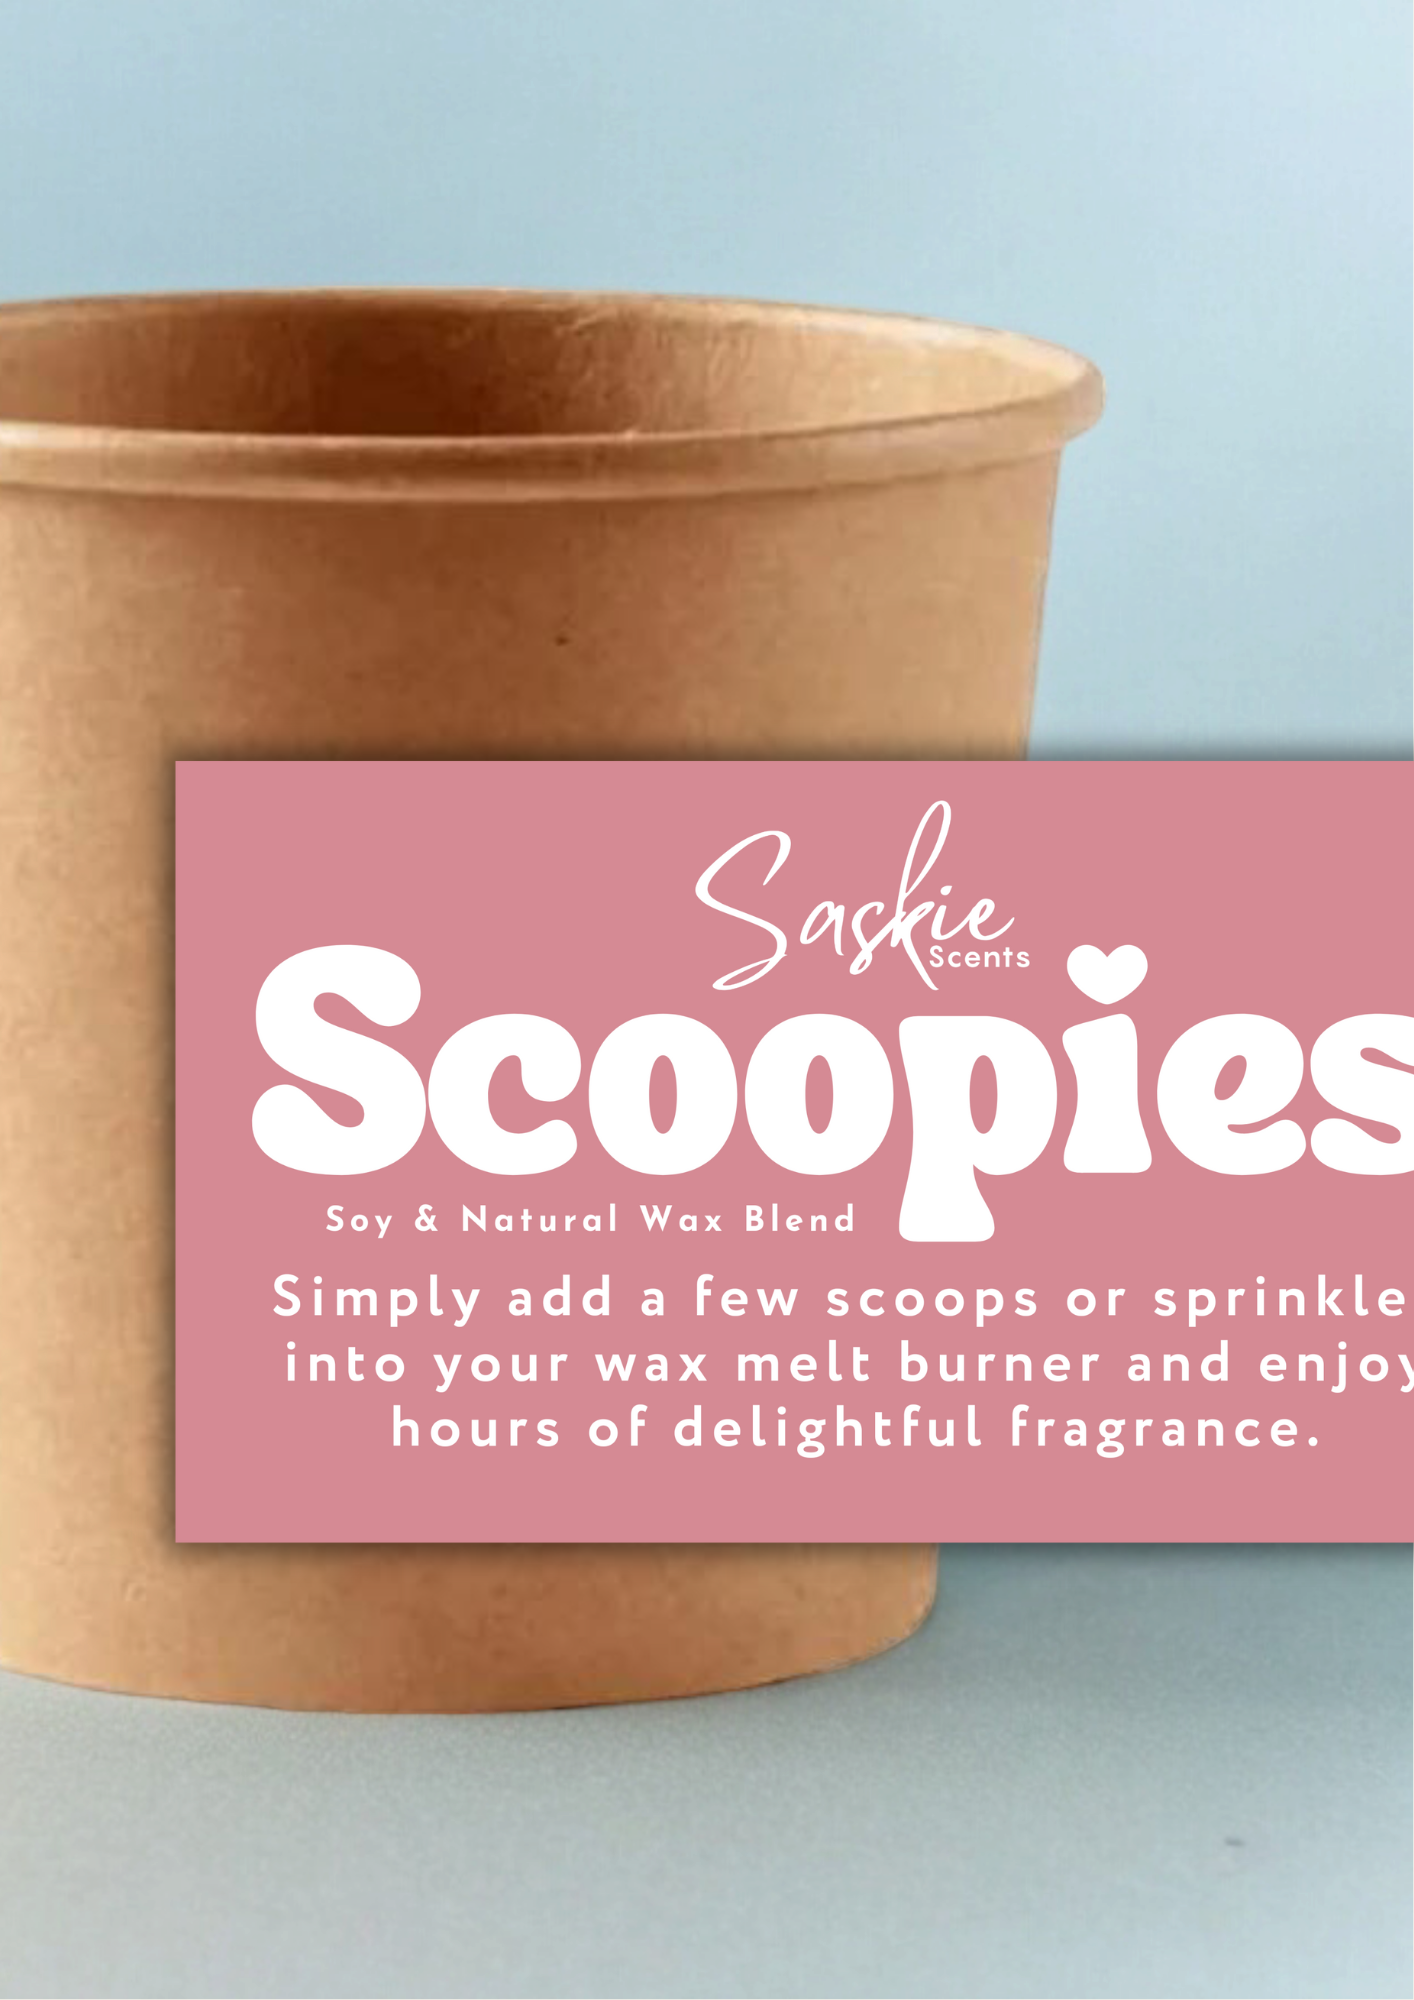 Scoopies pots - Wax melt product labels for pots